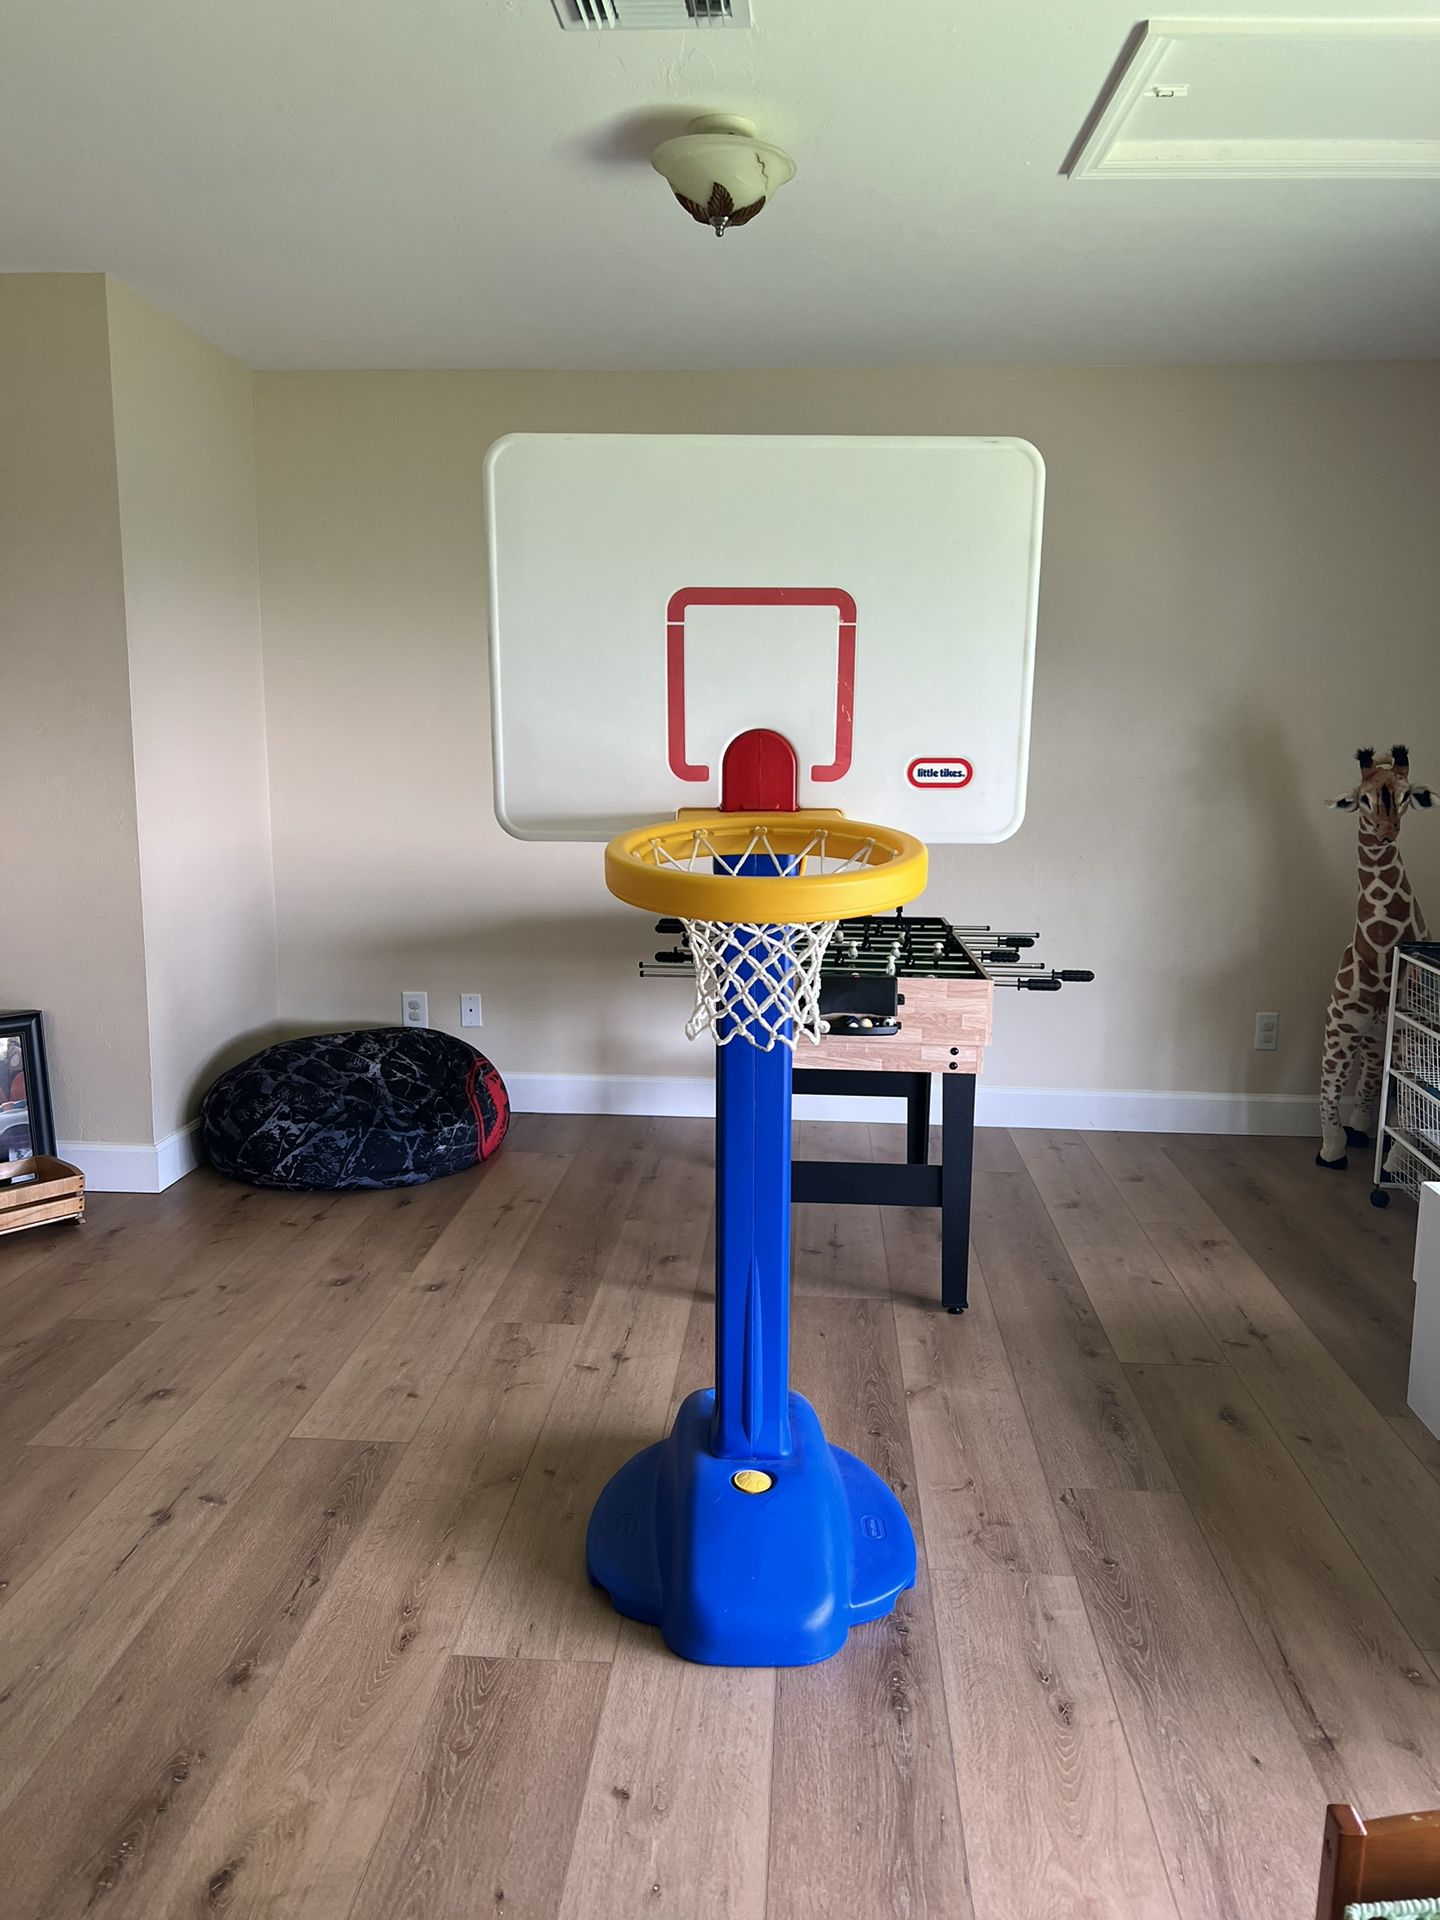 Toddler Multi Height Basketball Hoop 